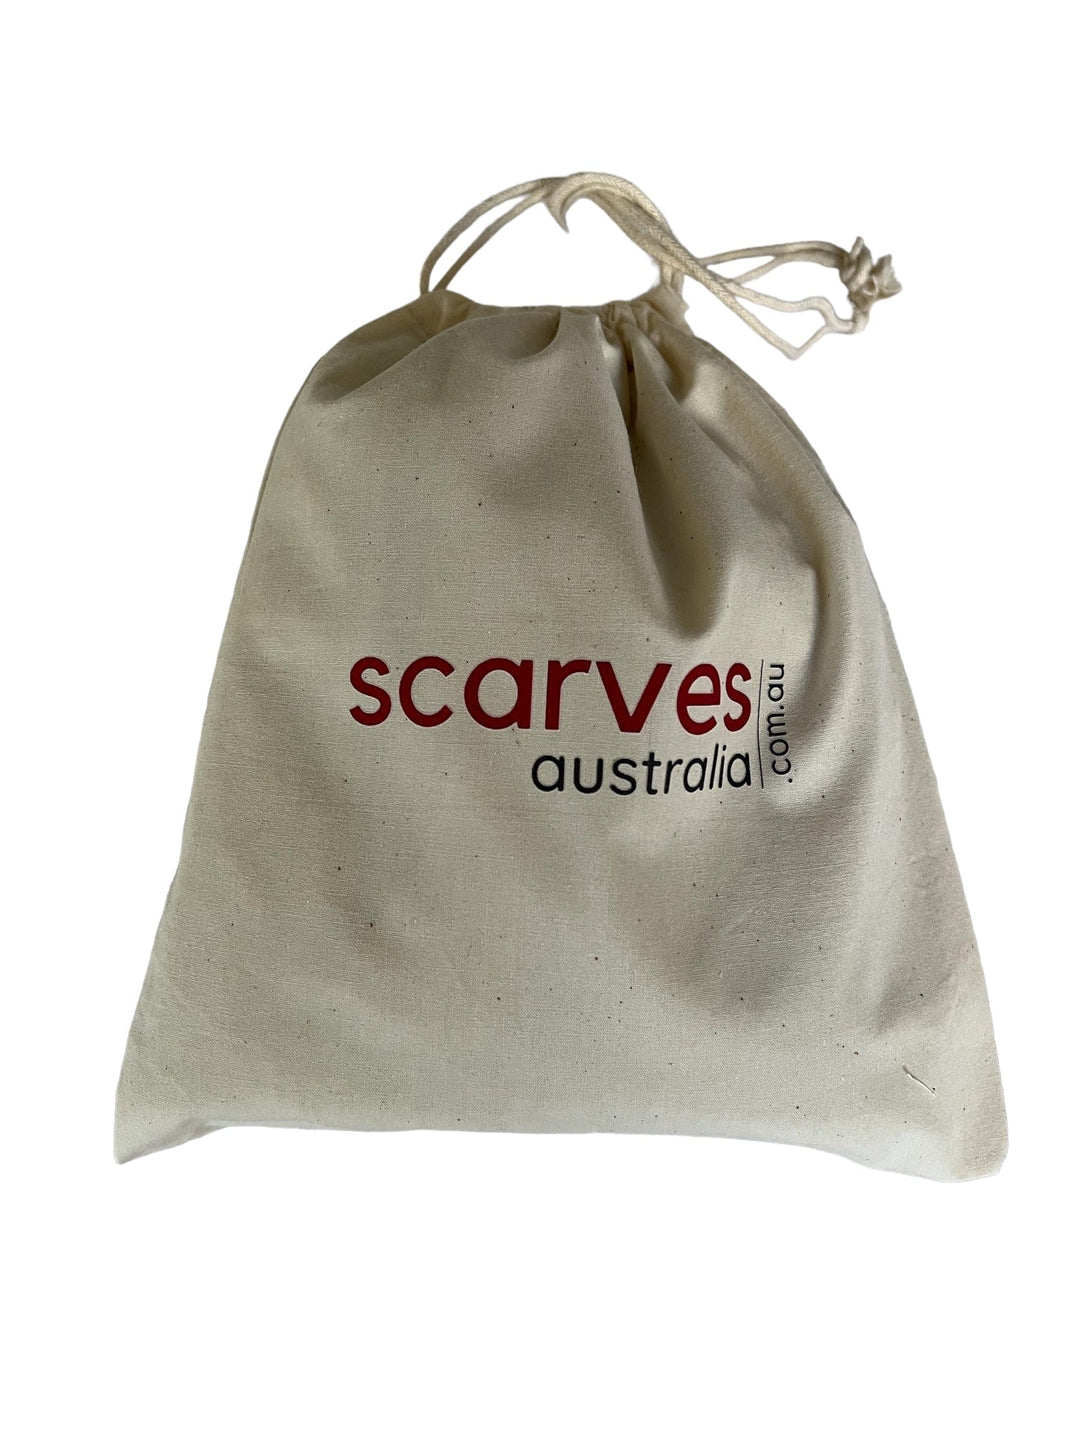 Scarves Australia Bag Scarf Storage Bag - NEW!